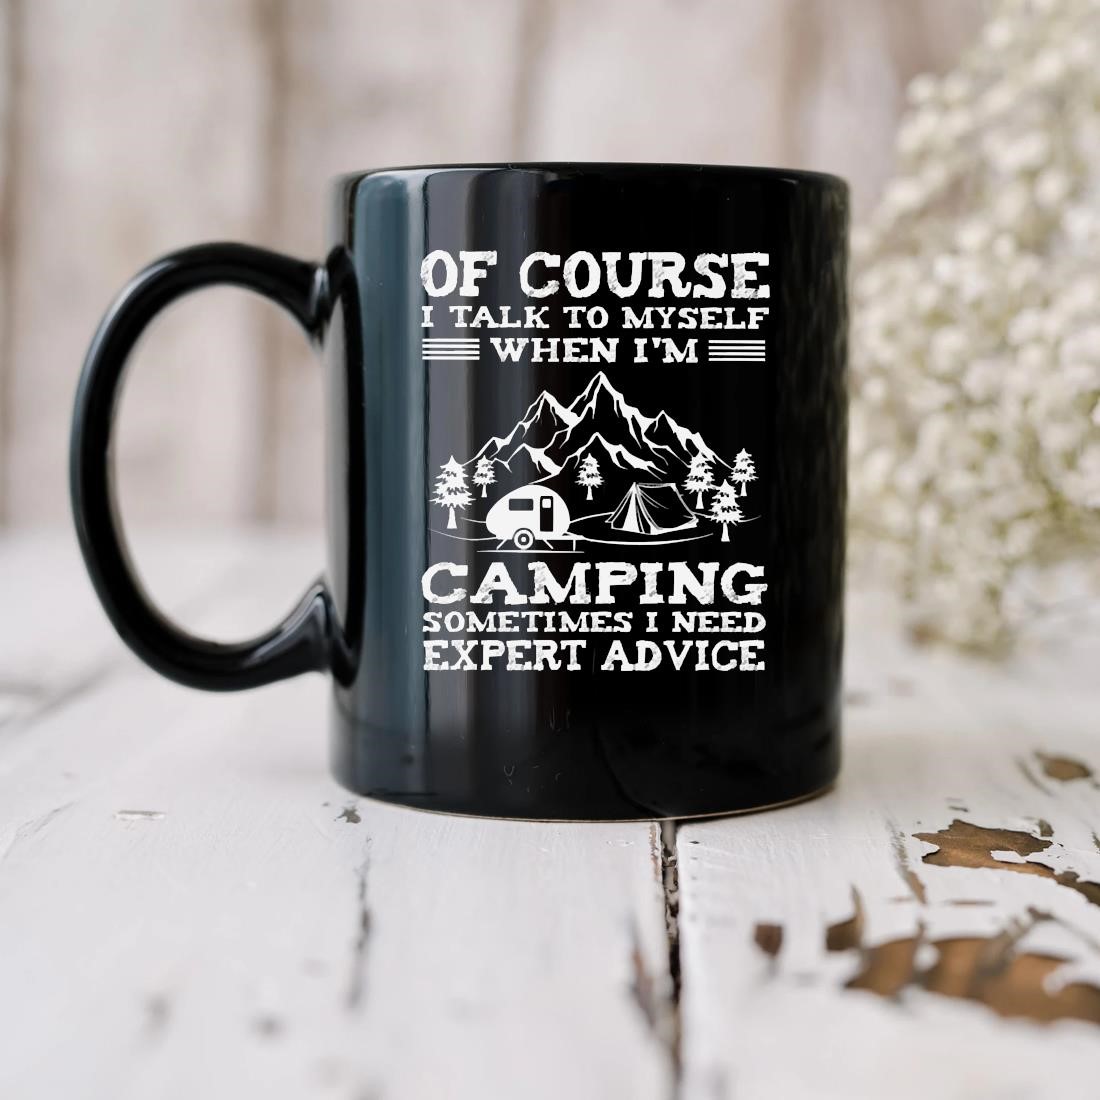 Of Course I Talk To Myself When I'm Camping Sometimes I Need Expert Advice Mug biu.jpg